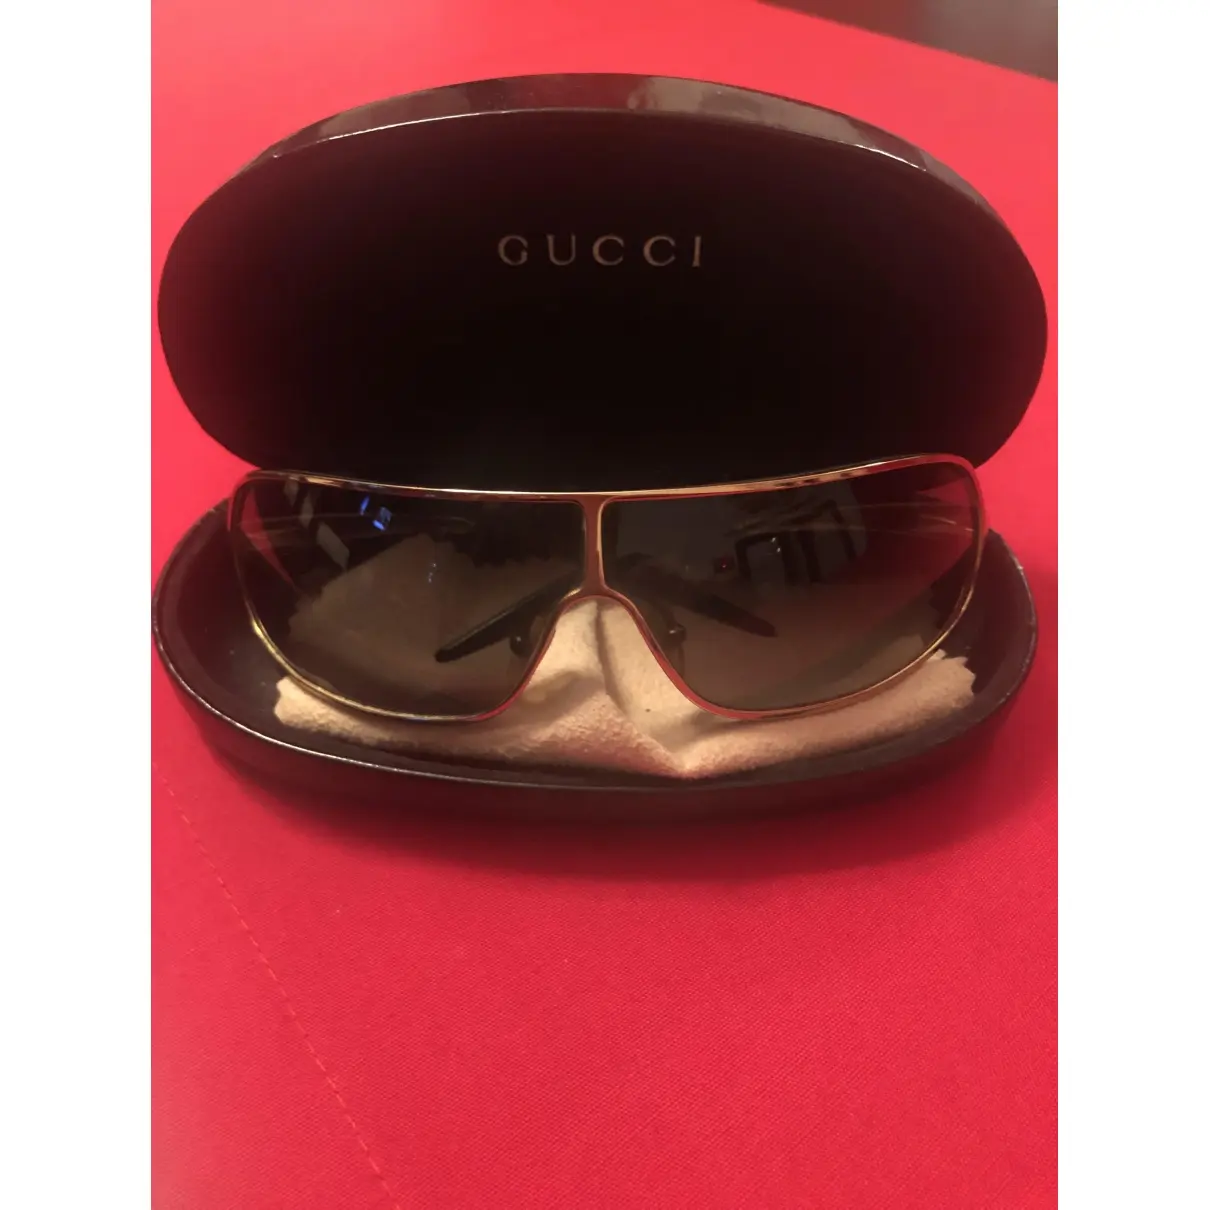 Gucci Sunglasses for sale - Vintage